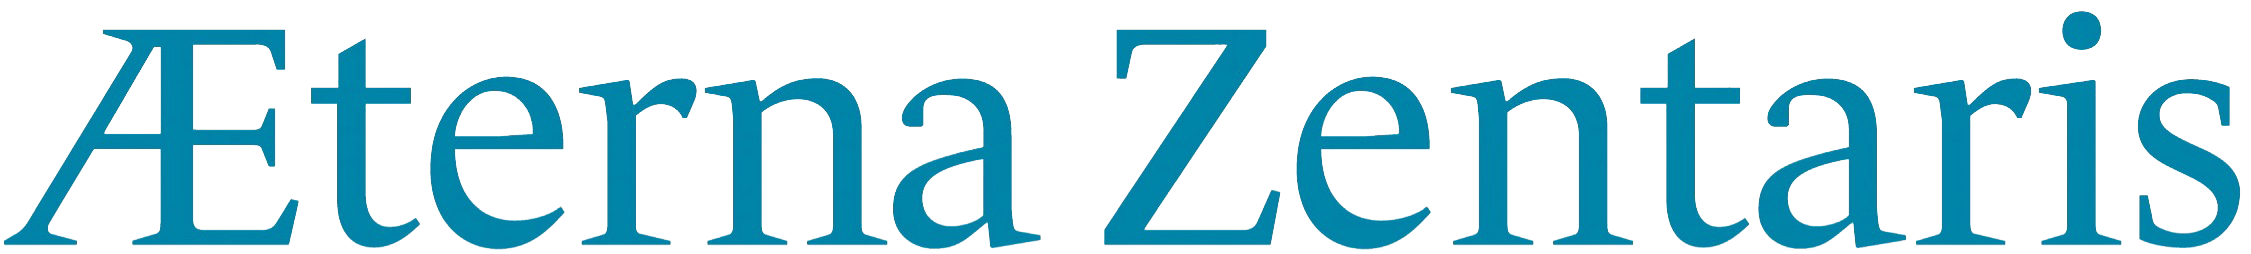 Logo de l'entreprise Aeterna Zentaris